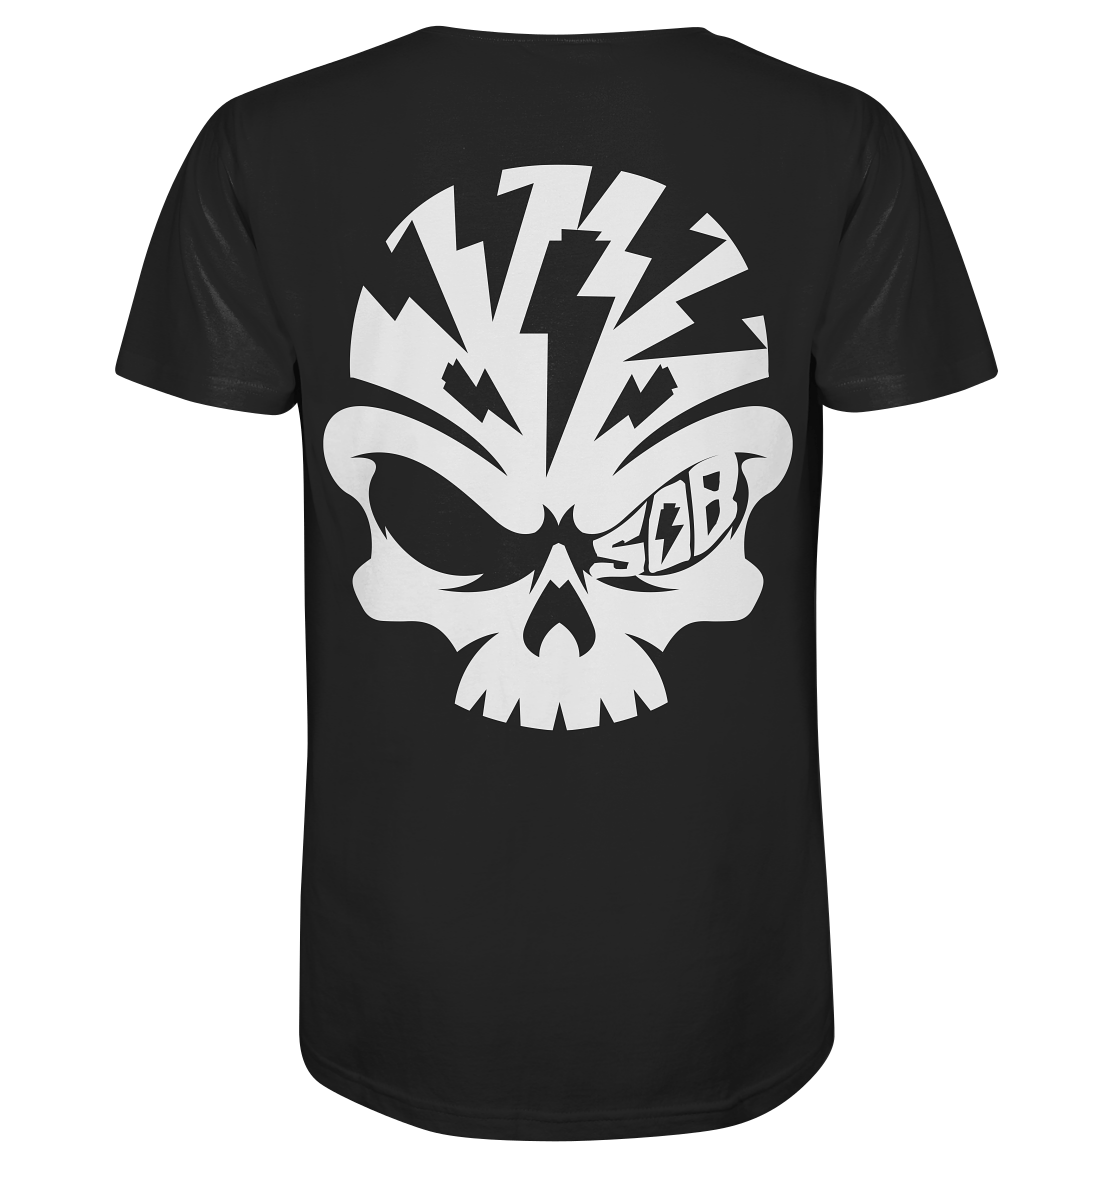 Sons of Battery® - E-MTB Brand & Community Unisex-Shirts Black / XS SoB Skull White - Organic Shirt E-Bike-Community